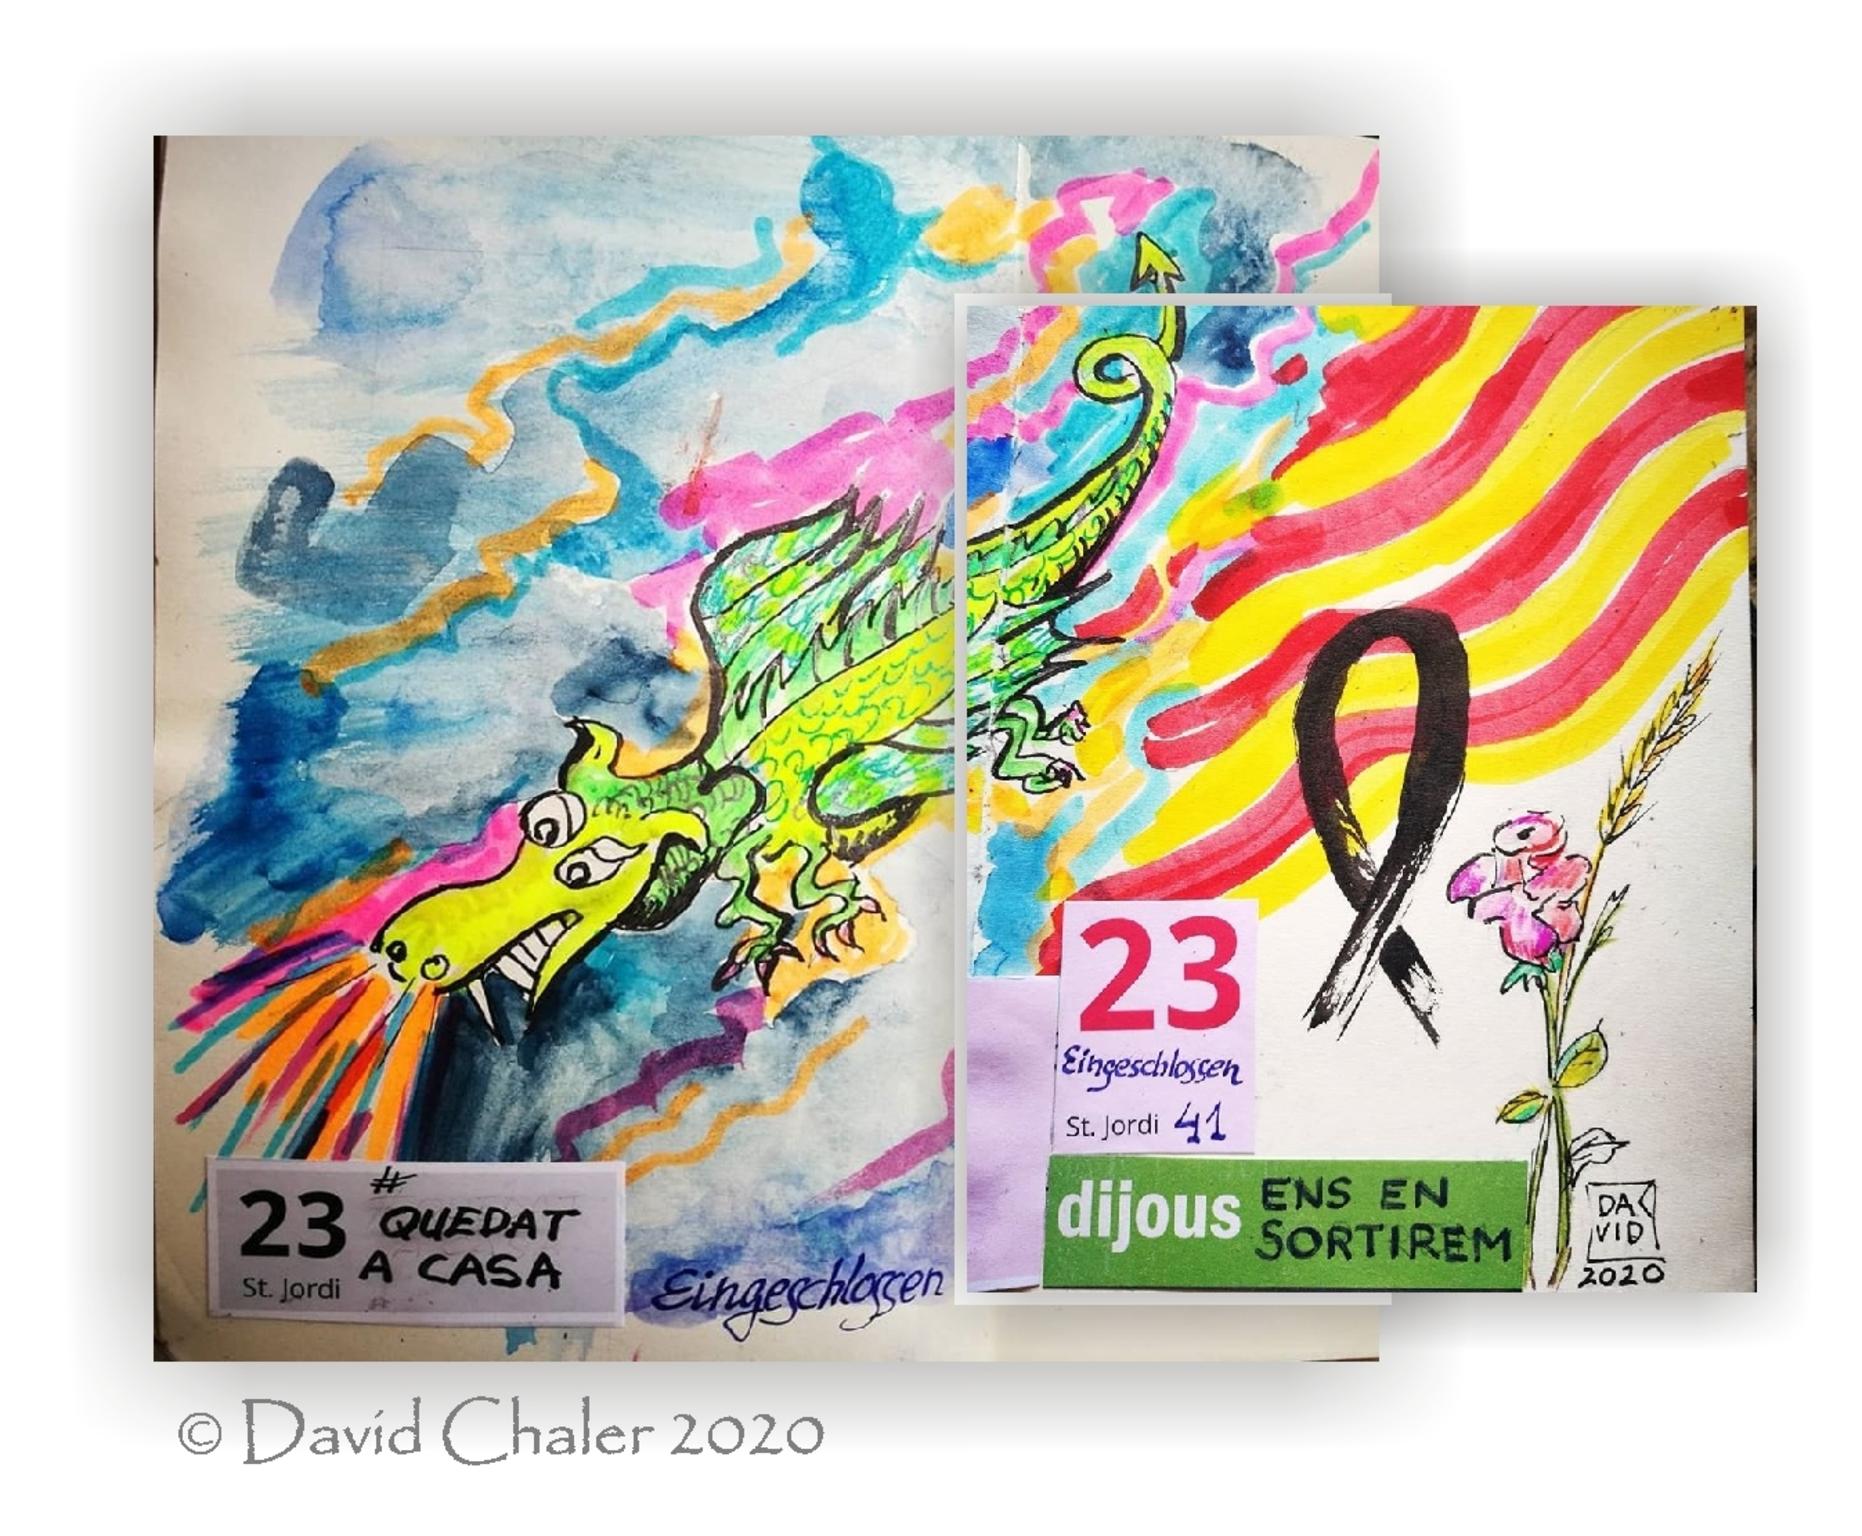  David Chaler 2020